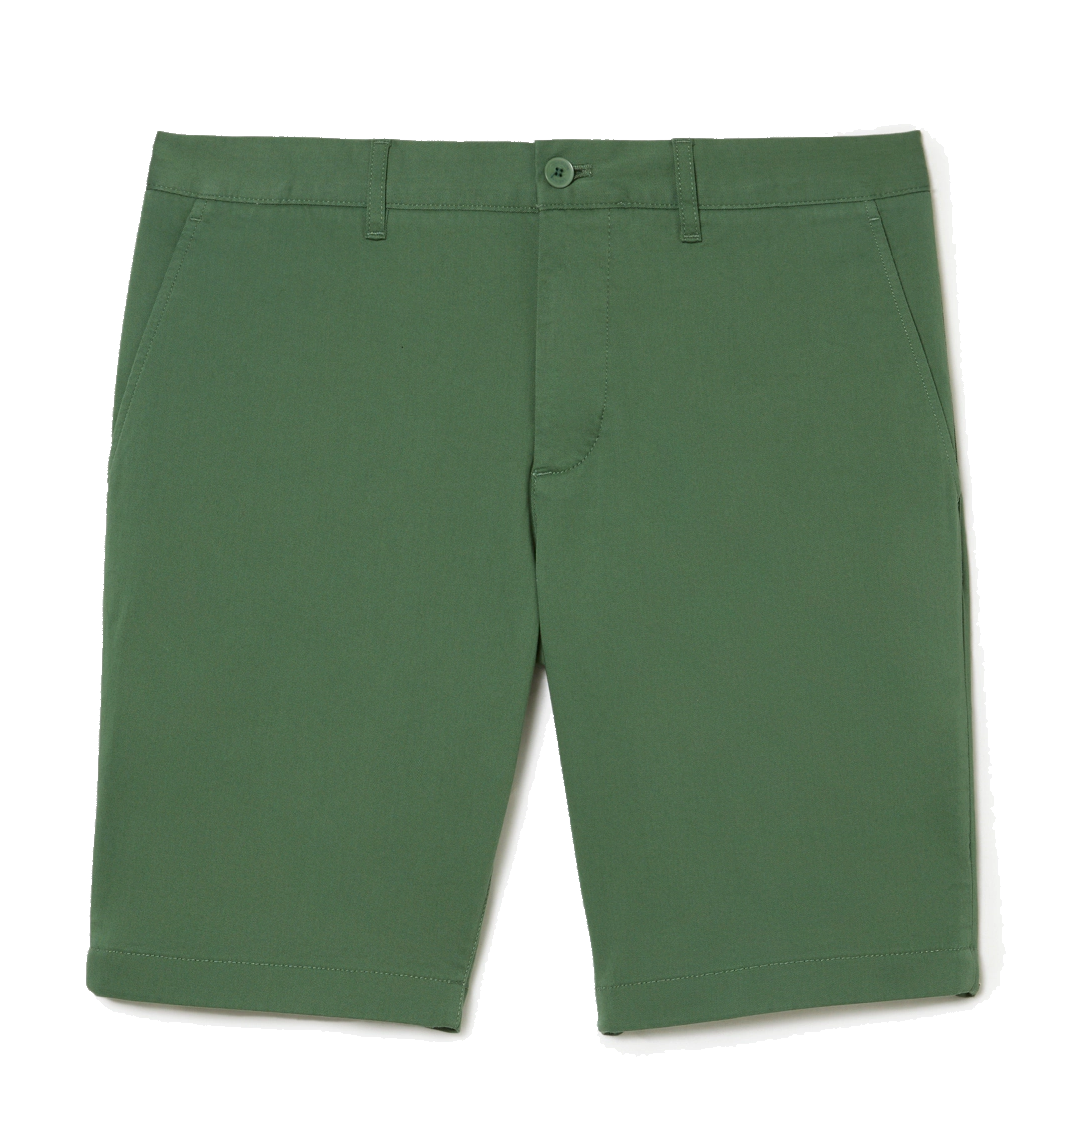 Lacoste Lacoste Slim Fit Stretch Cotton Bermuda Shorts Green Khaki